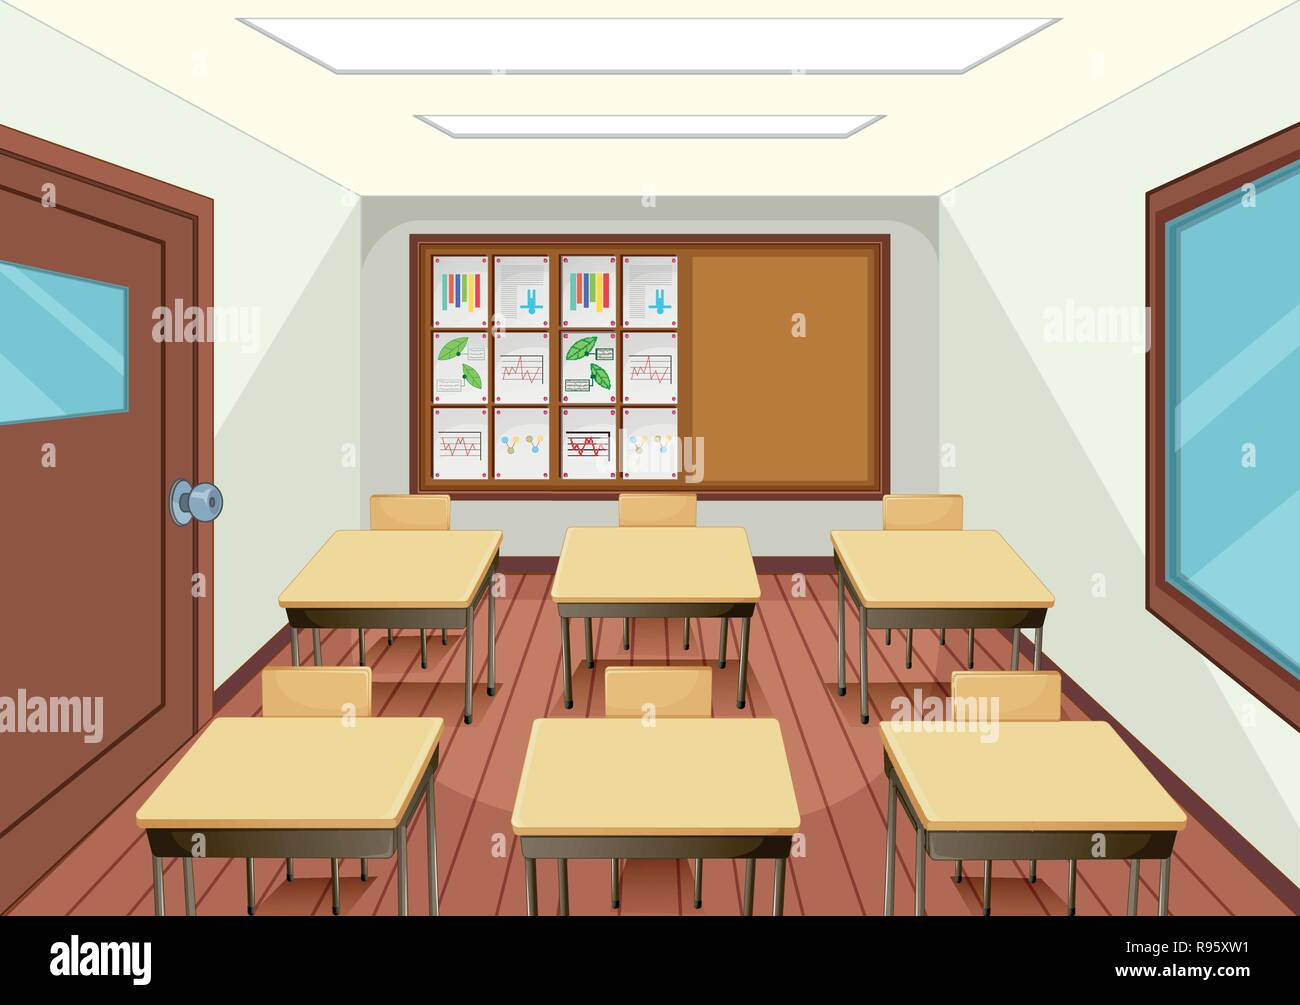 Empty classroom interior design illustration Stock Vector